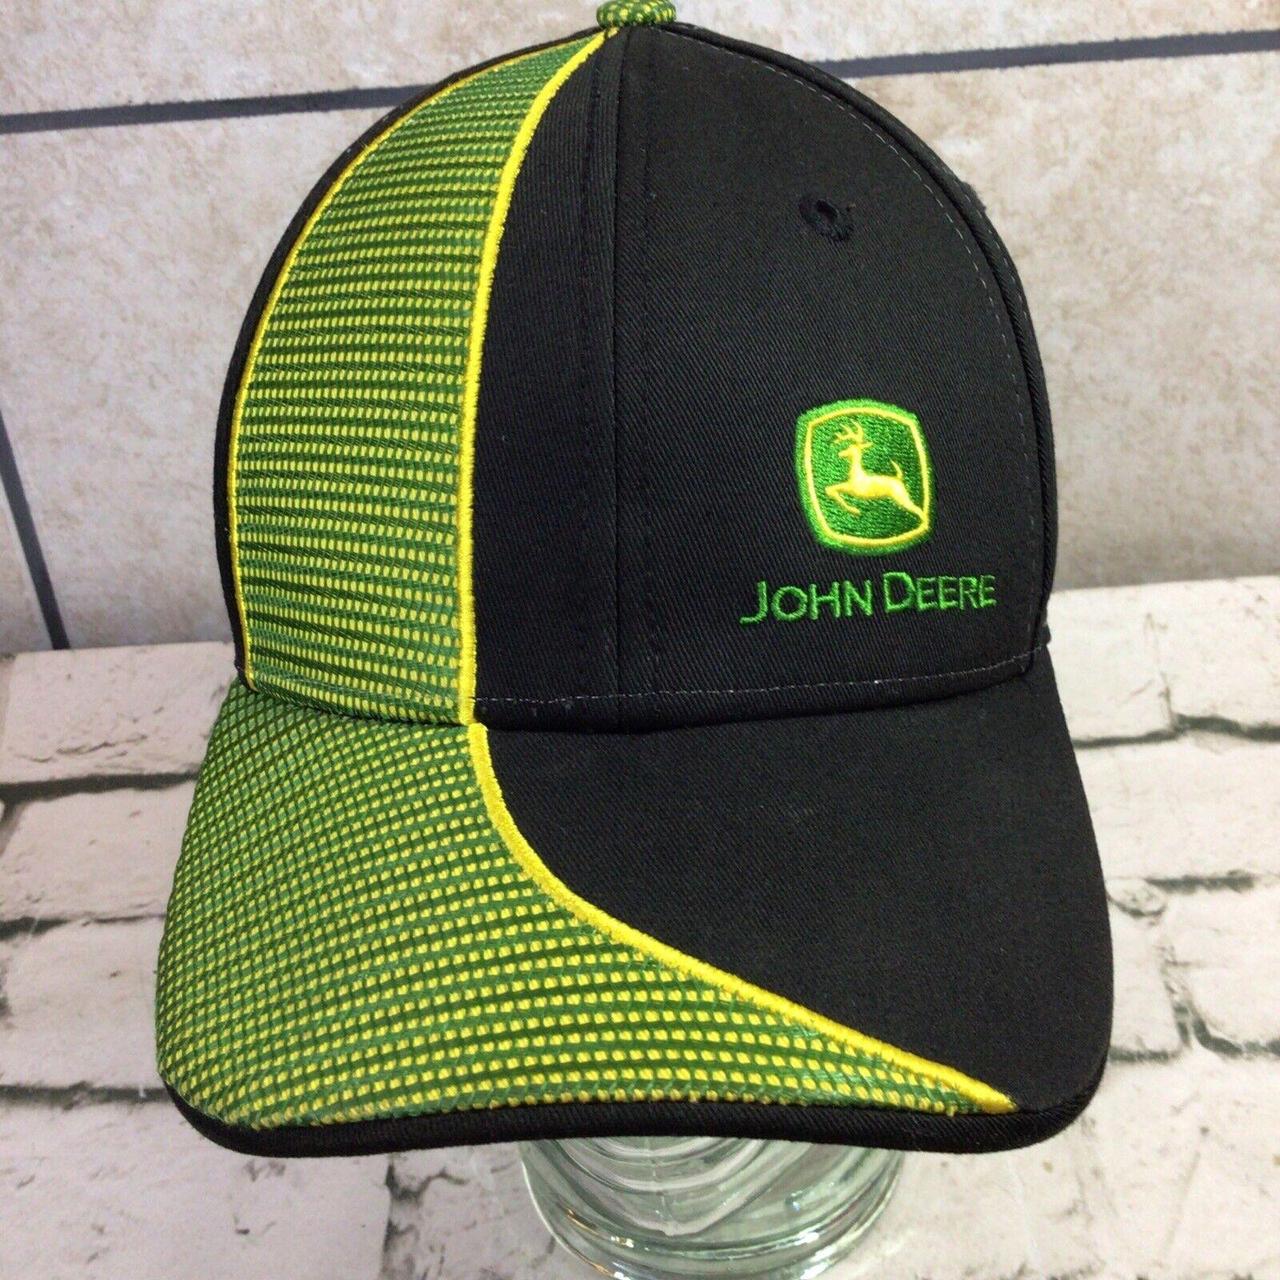 Black & Green John Deere Cap